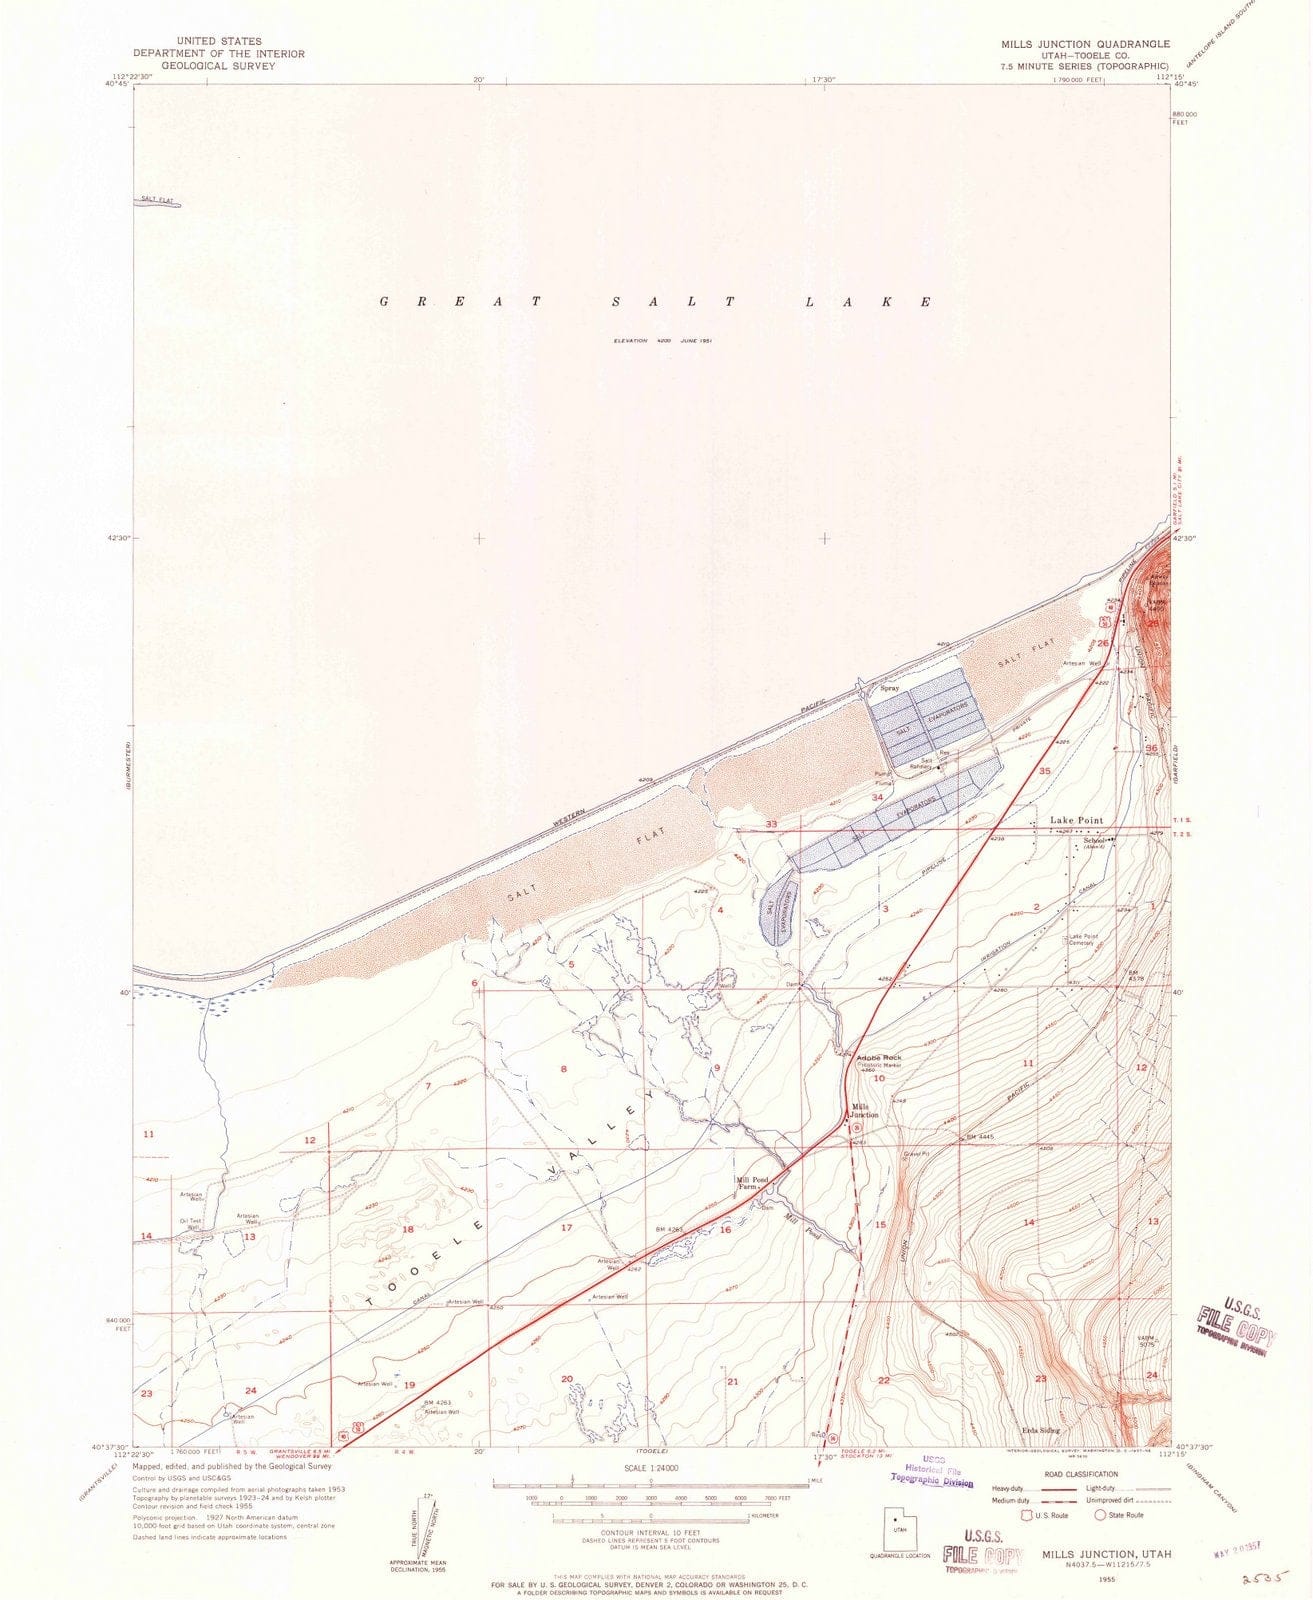 1955 Mills Junction, UT - Utah - USGS Topographic Map